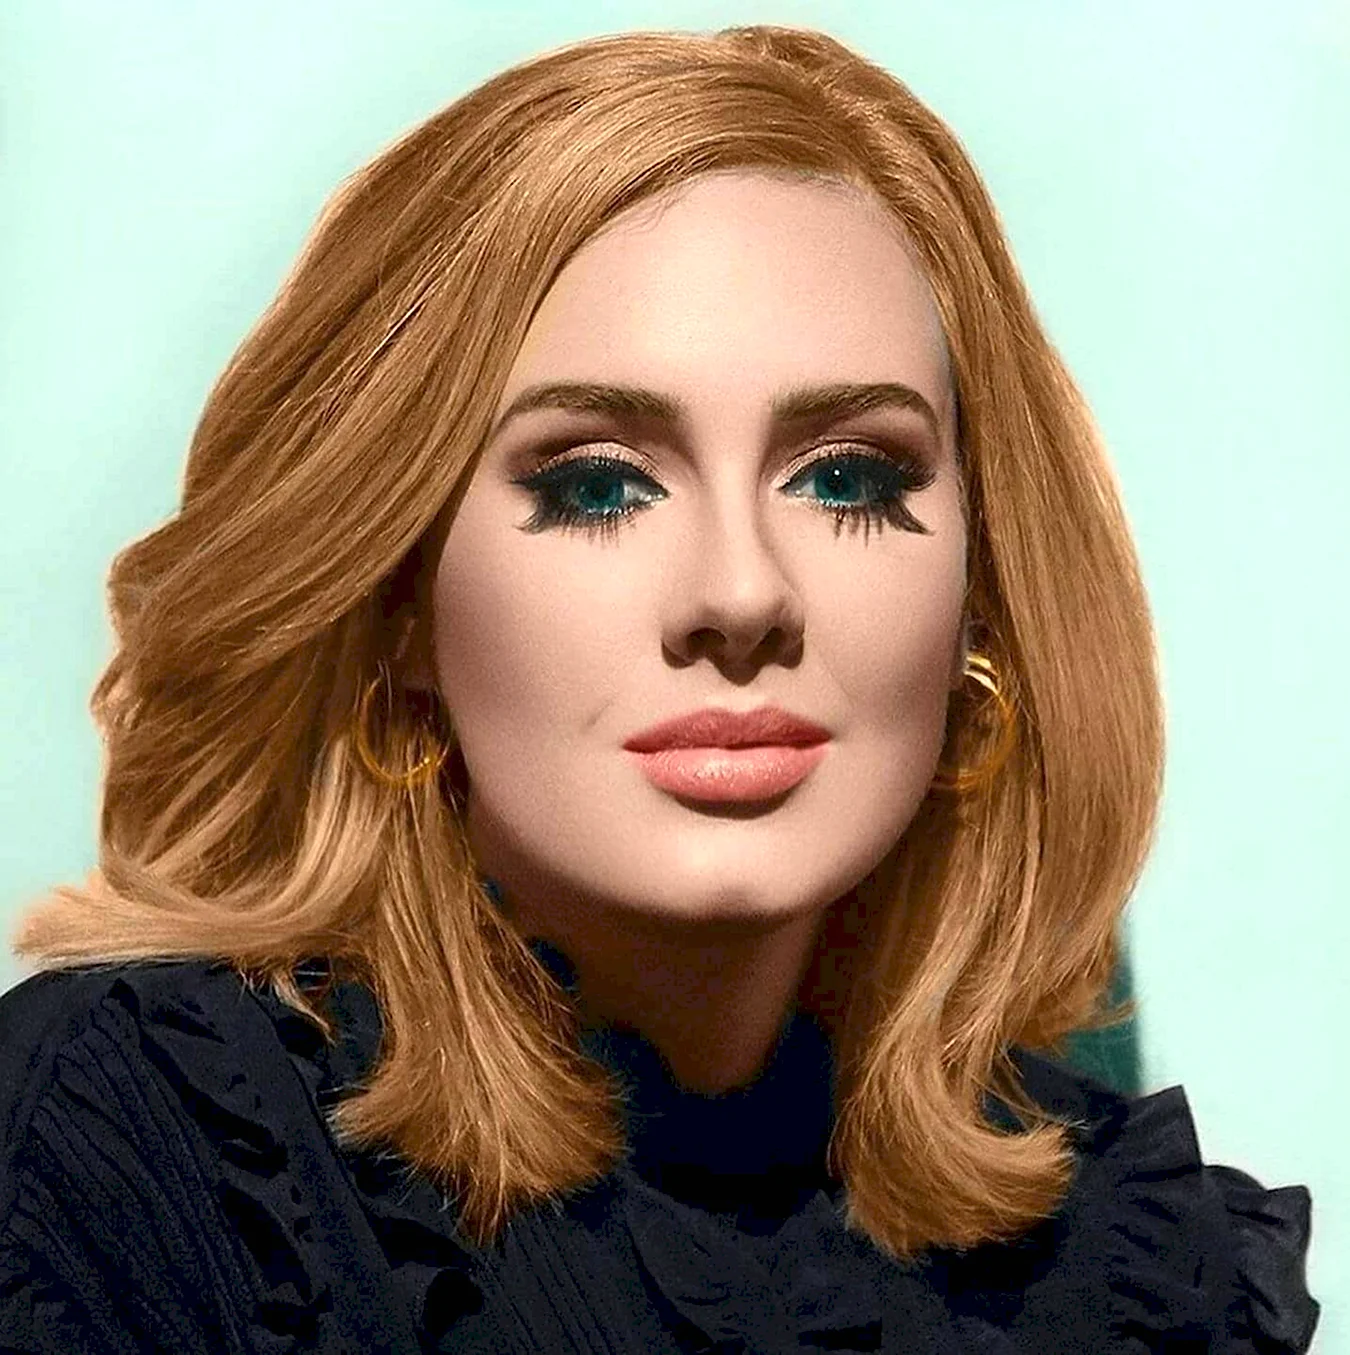 Adele 2015